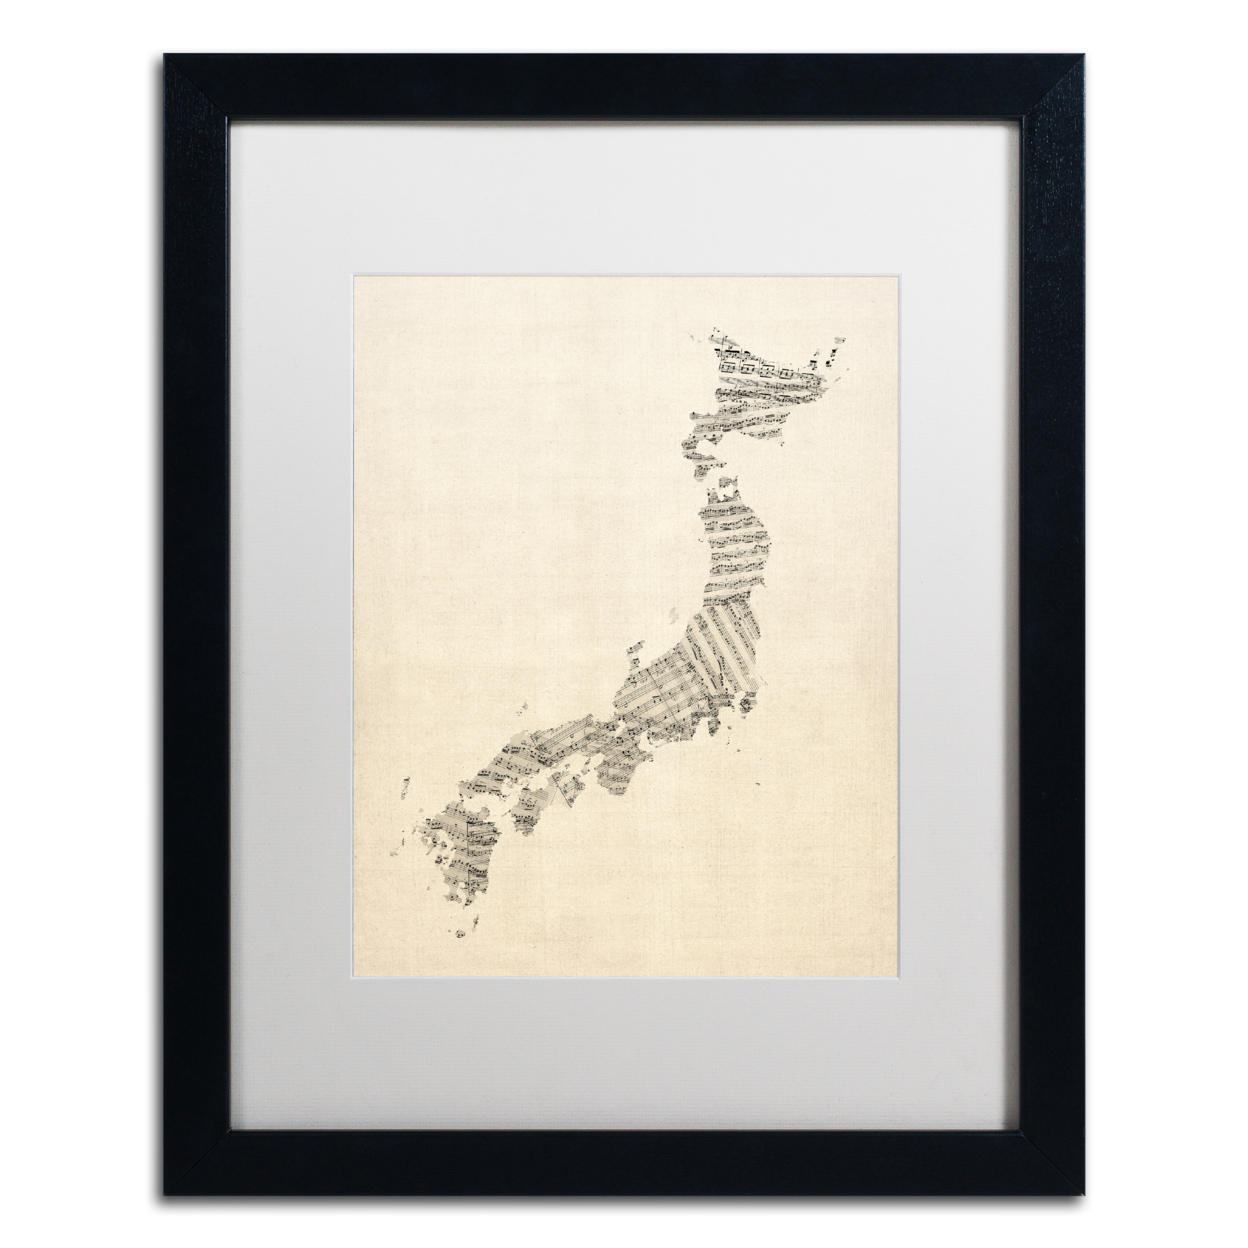 Michael Tompsett 'Old Sheet Music Map Of Japan' Black Wooden Framed Art 18 X 22 Inches